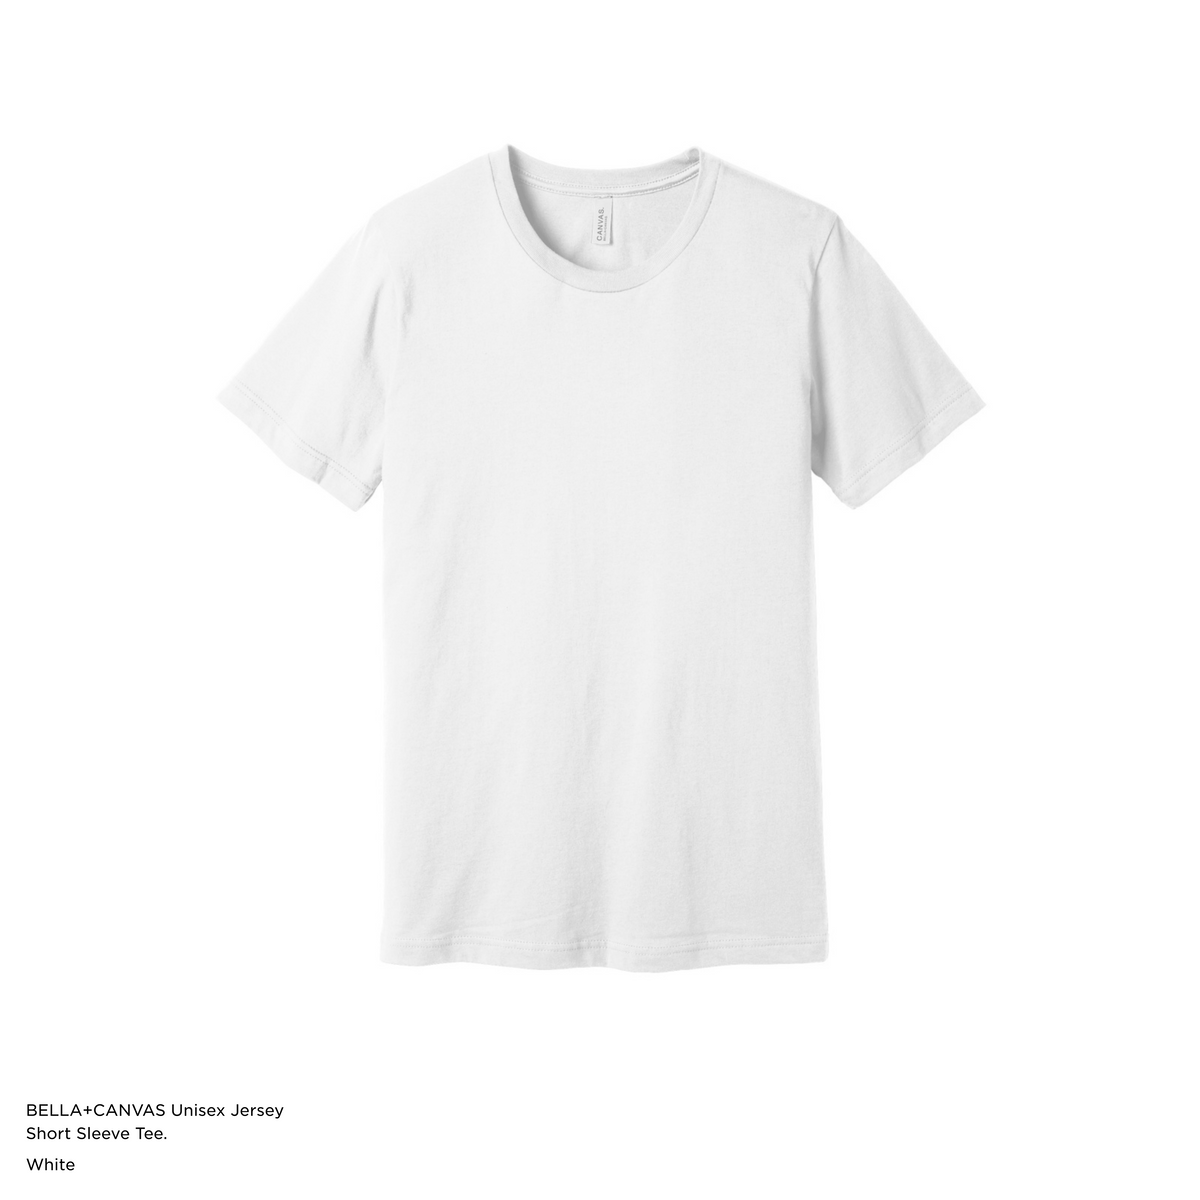 Personalized BELLA+CANVAS Unisex Jersey Short Sleeve T-Shirt